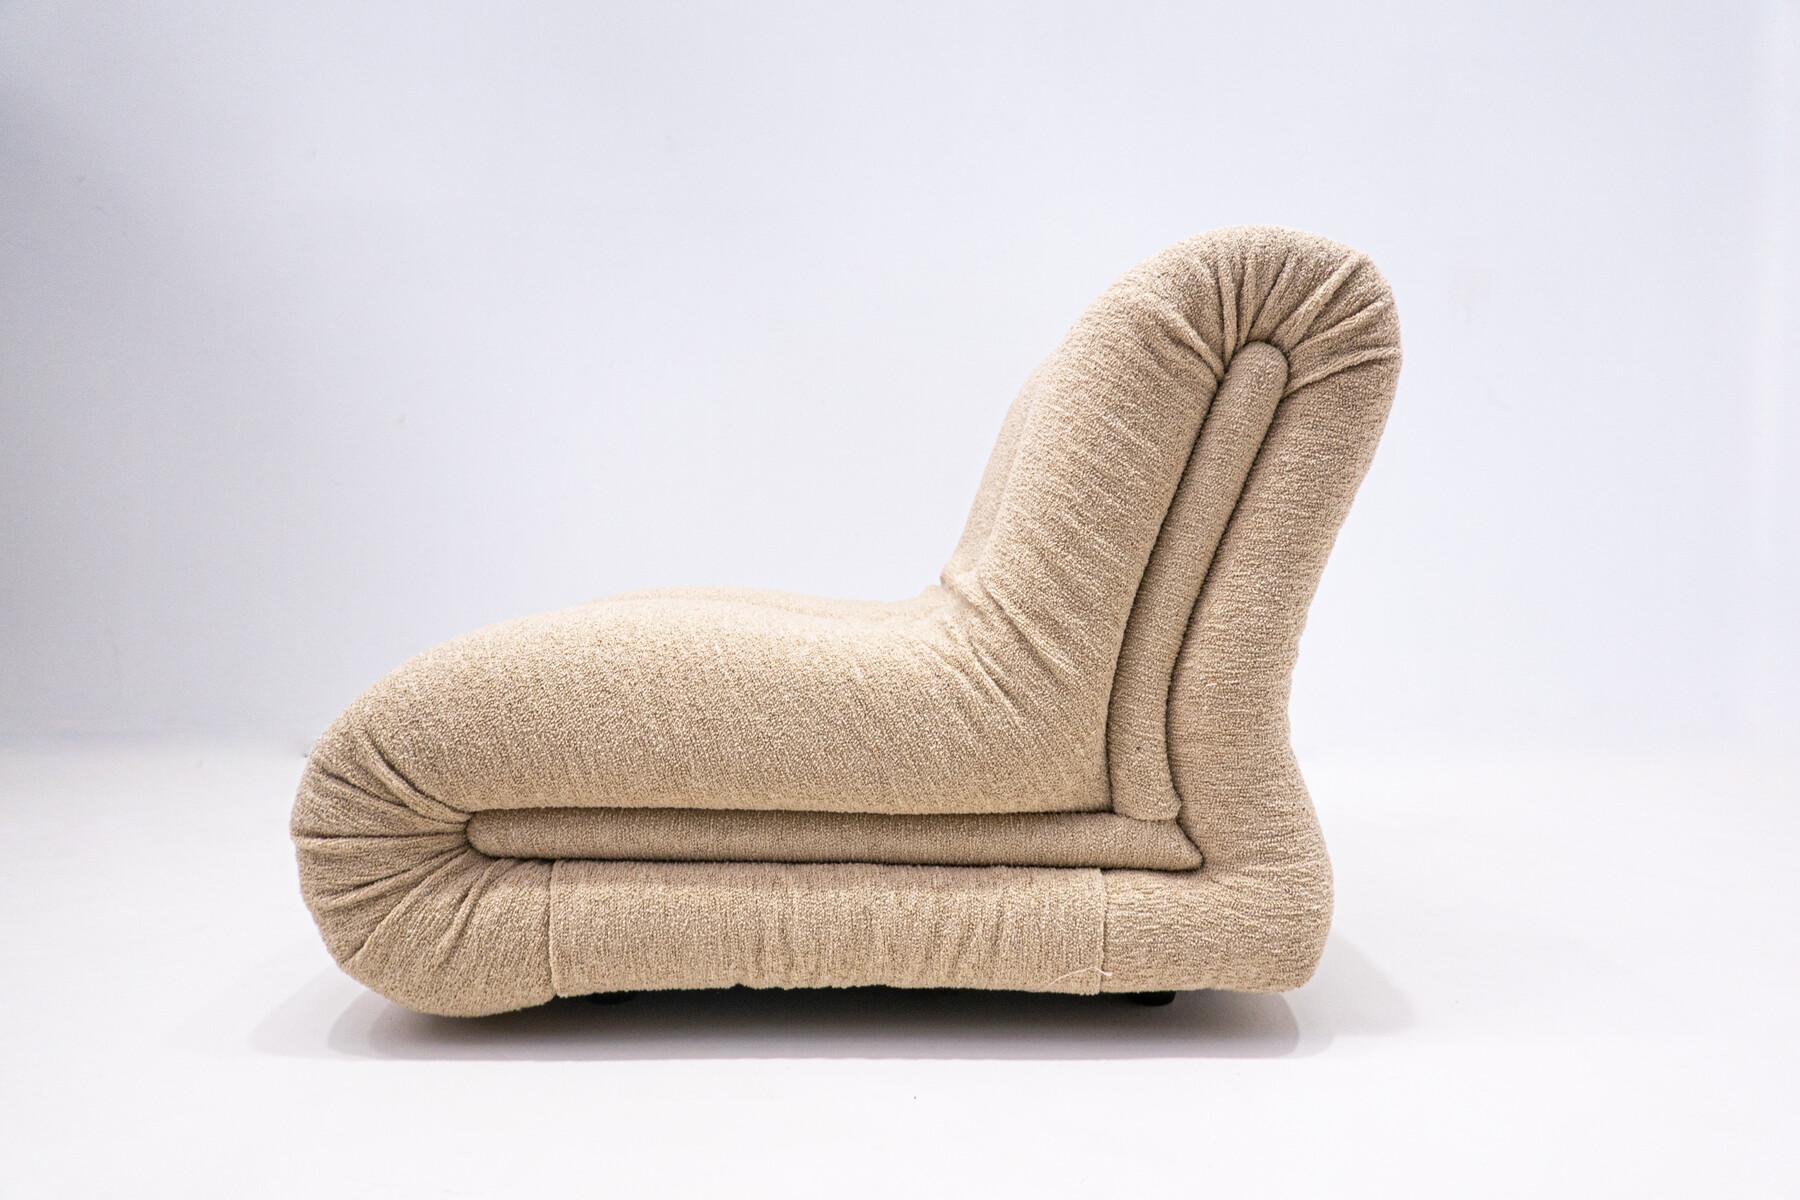 Mid-Century Modern Pagru' Modular sofa by Claudio Vagnoni for 1P, Italy, 1960s.